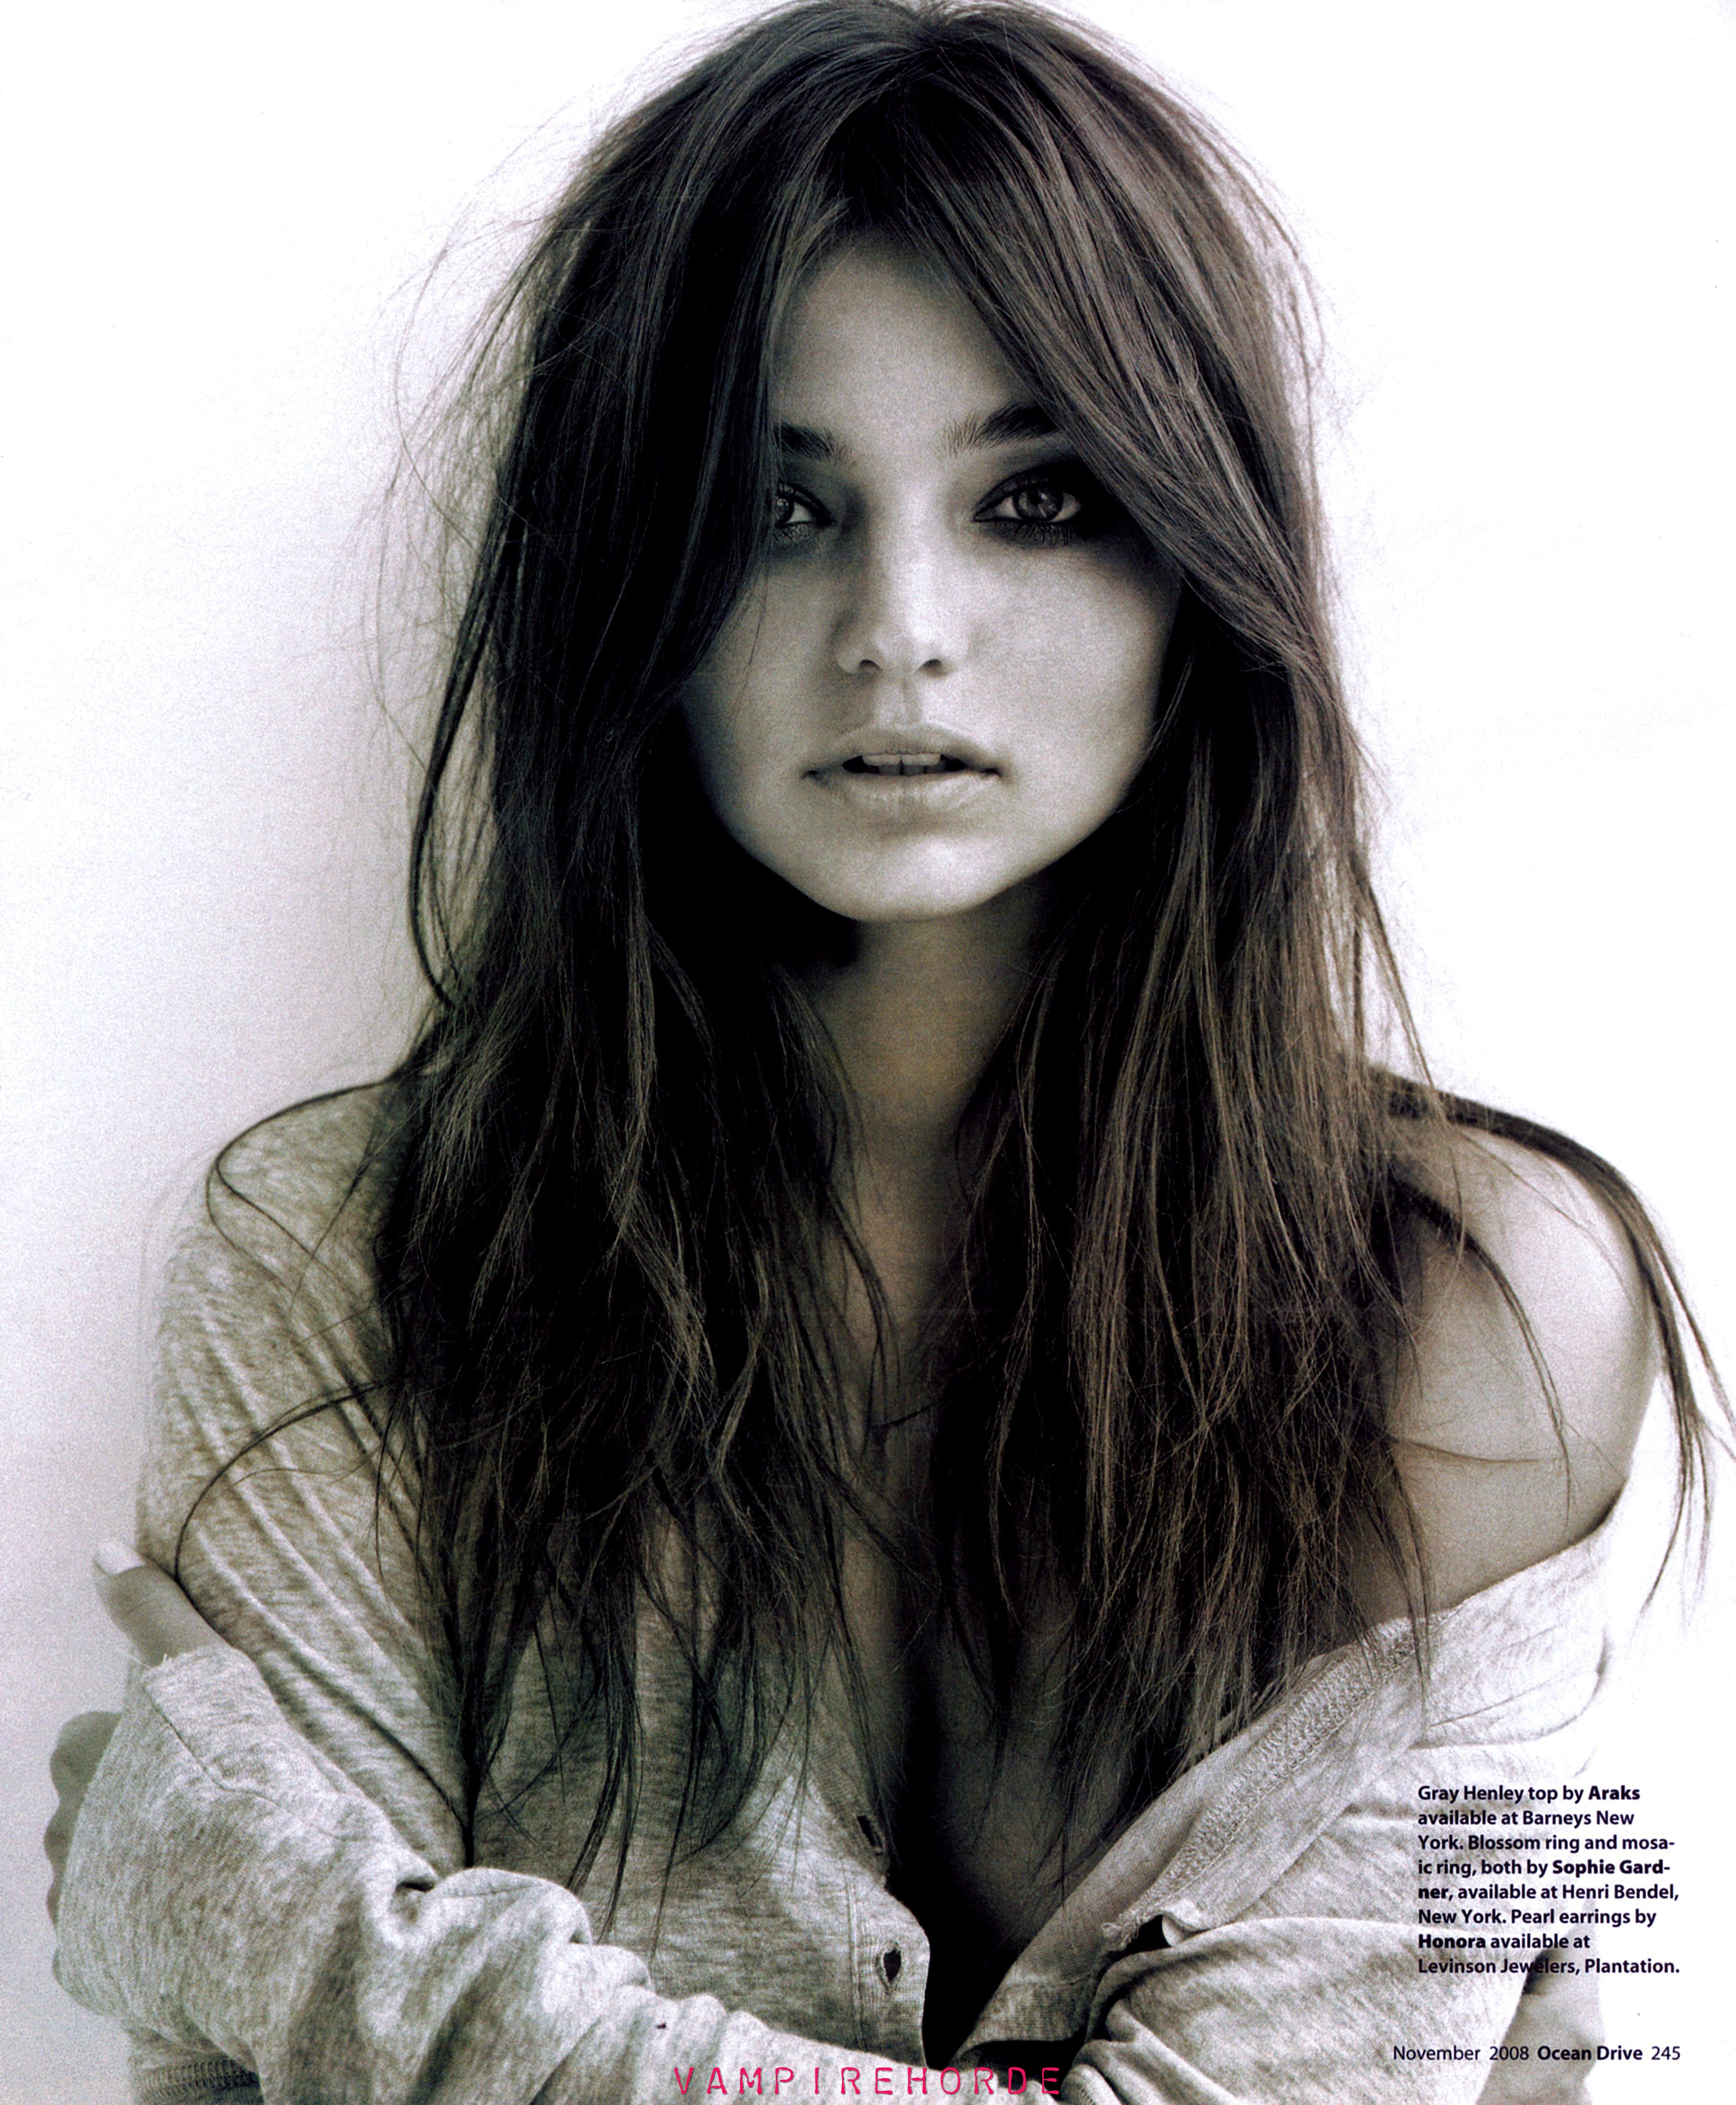 women, Miranda Kerr, models, magazine scans - desktop wallpaper